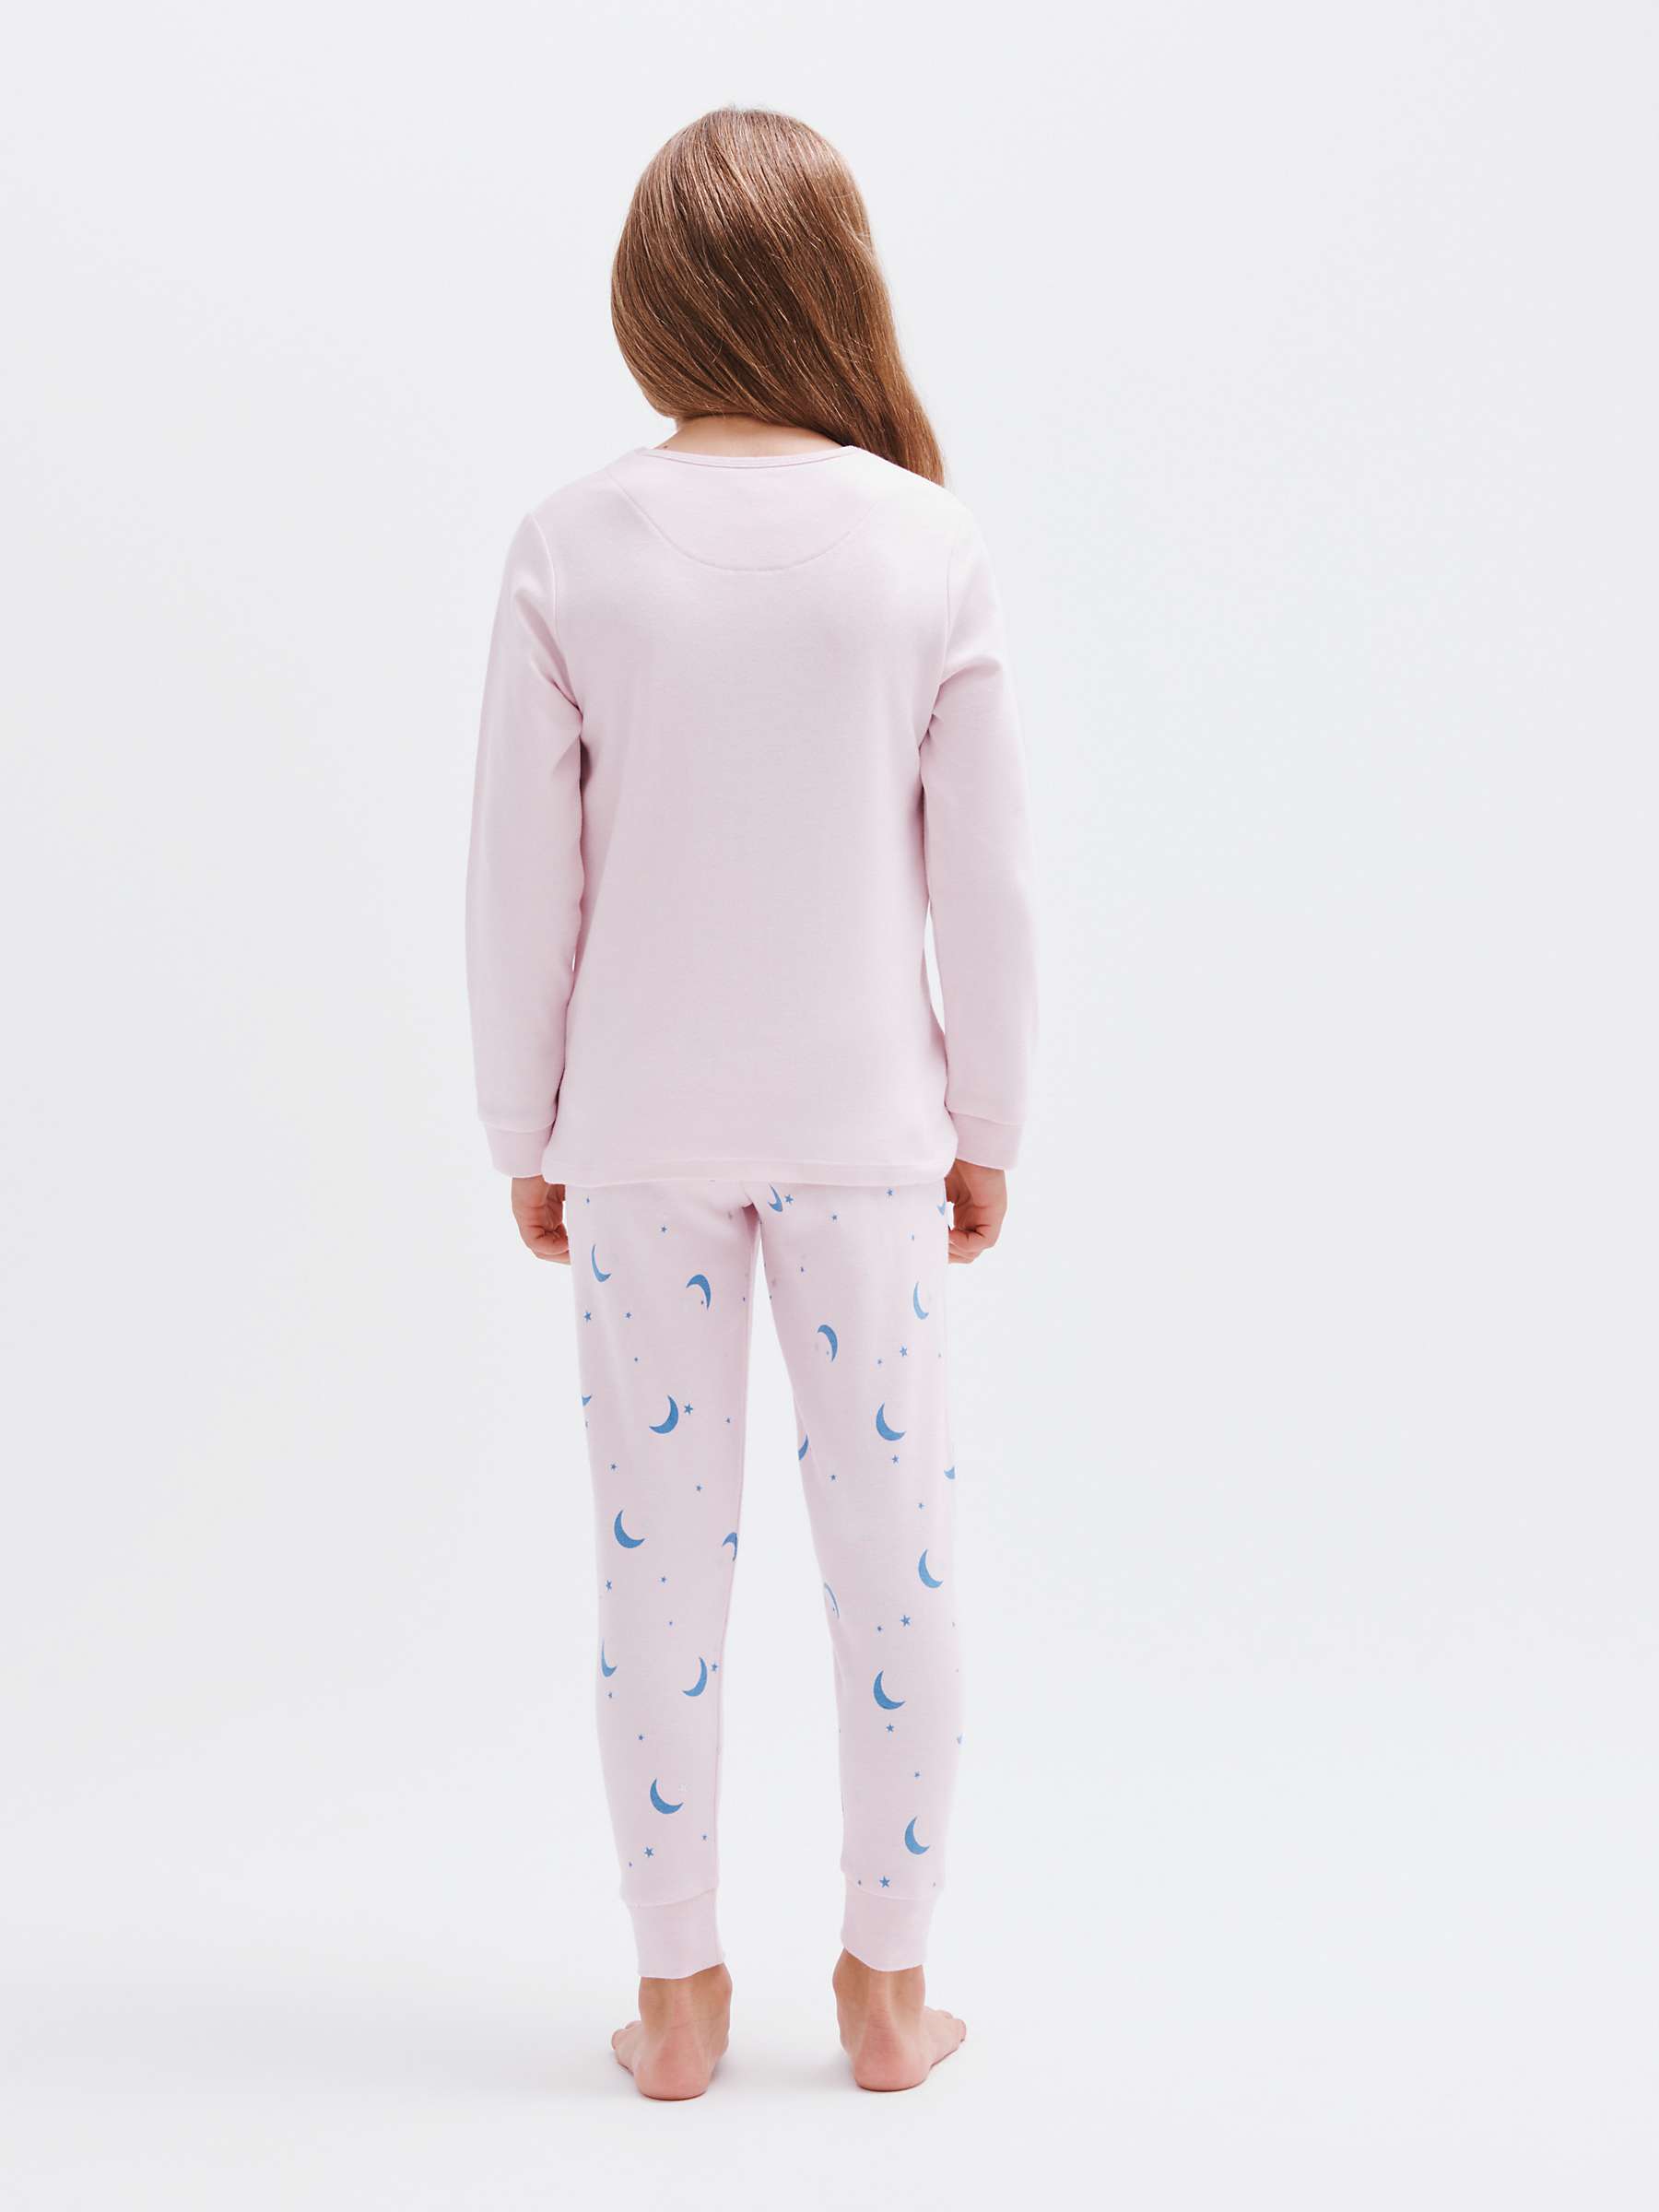 John Lewis John lewis age 7 girl Unicorn Theme shorts pyjama set x2 